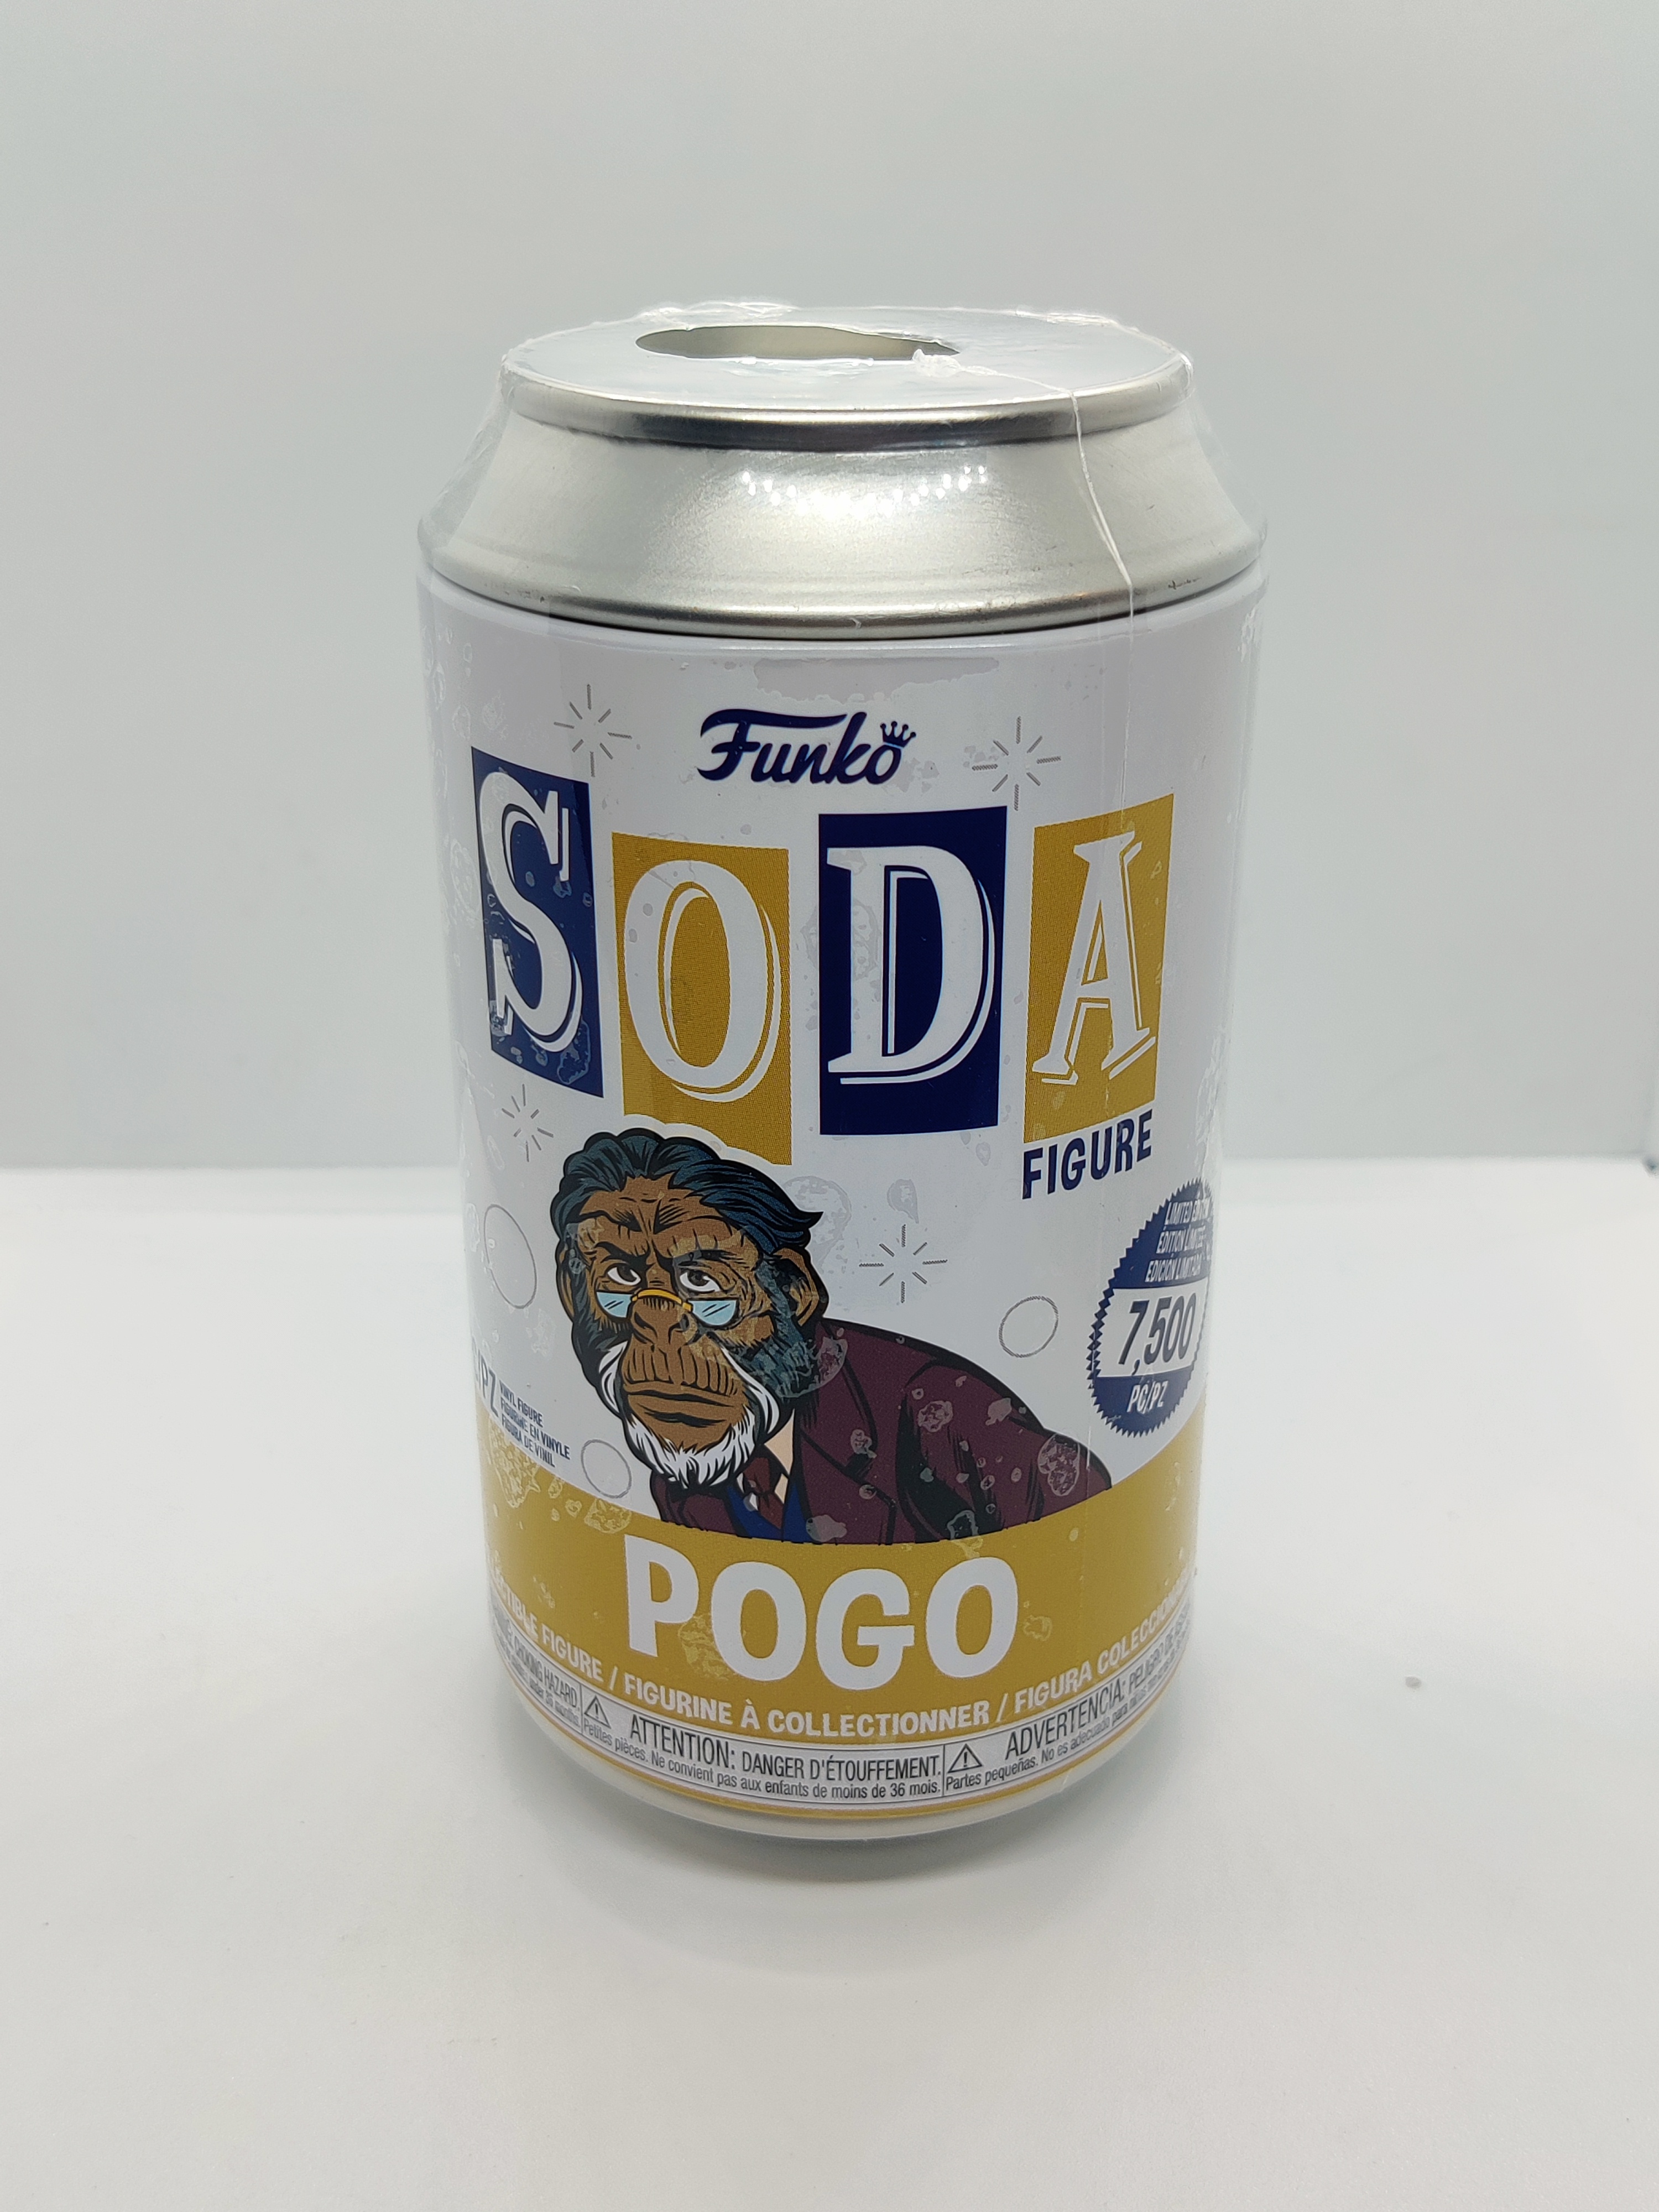 Funko Soda Umbrella Academy - POGO LE 7,500pcs Factory Sealed Can